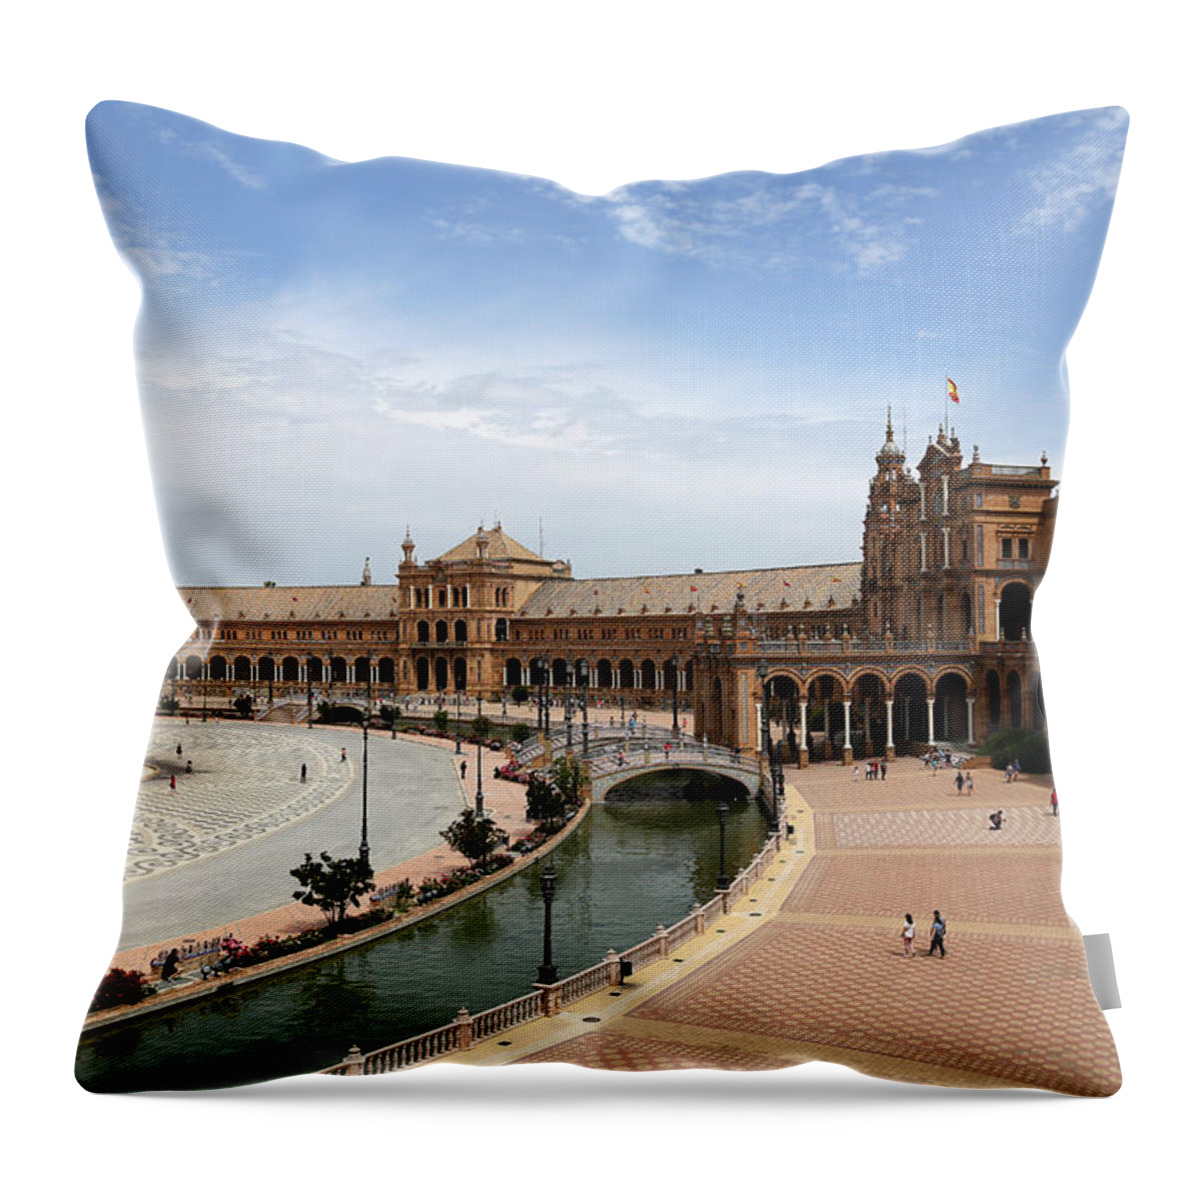 Plaza De Espana Throw Pillow featuring the photograph Plaza De Espana 4 by Andrew Fare